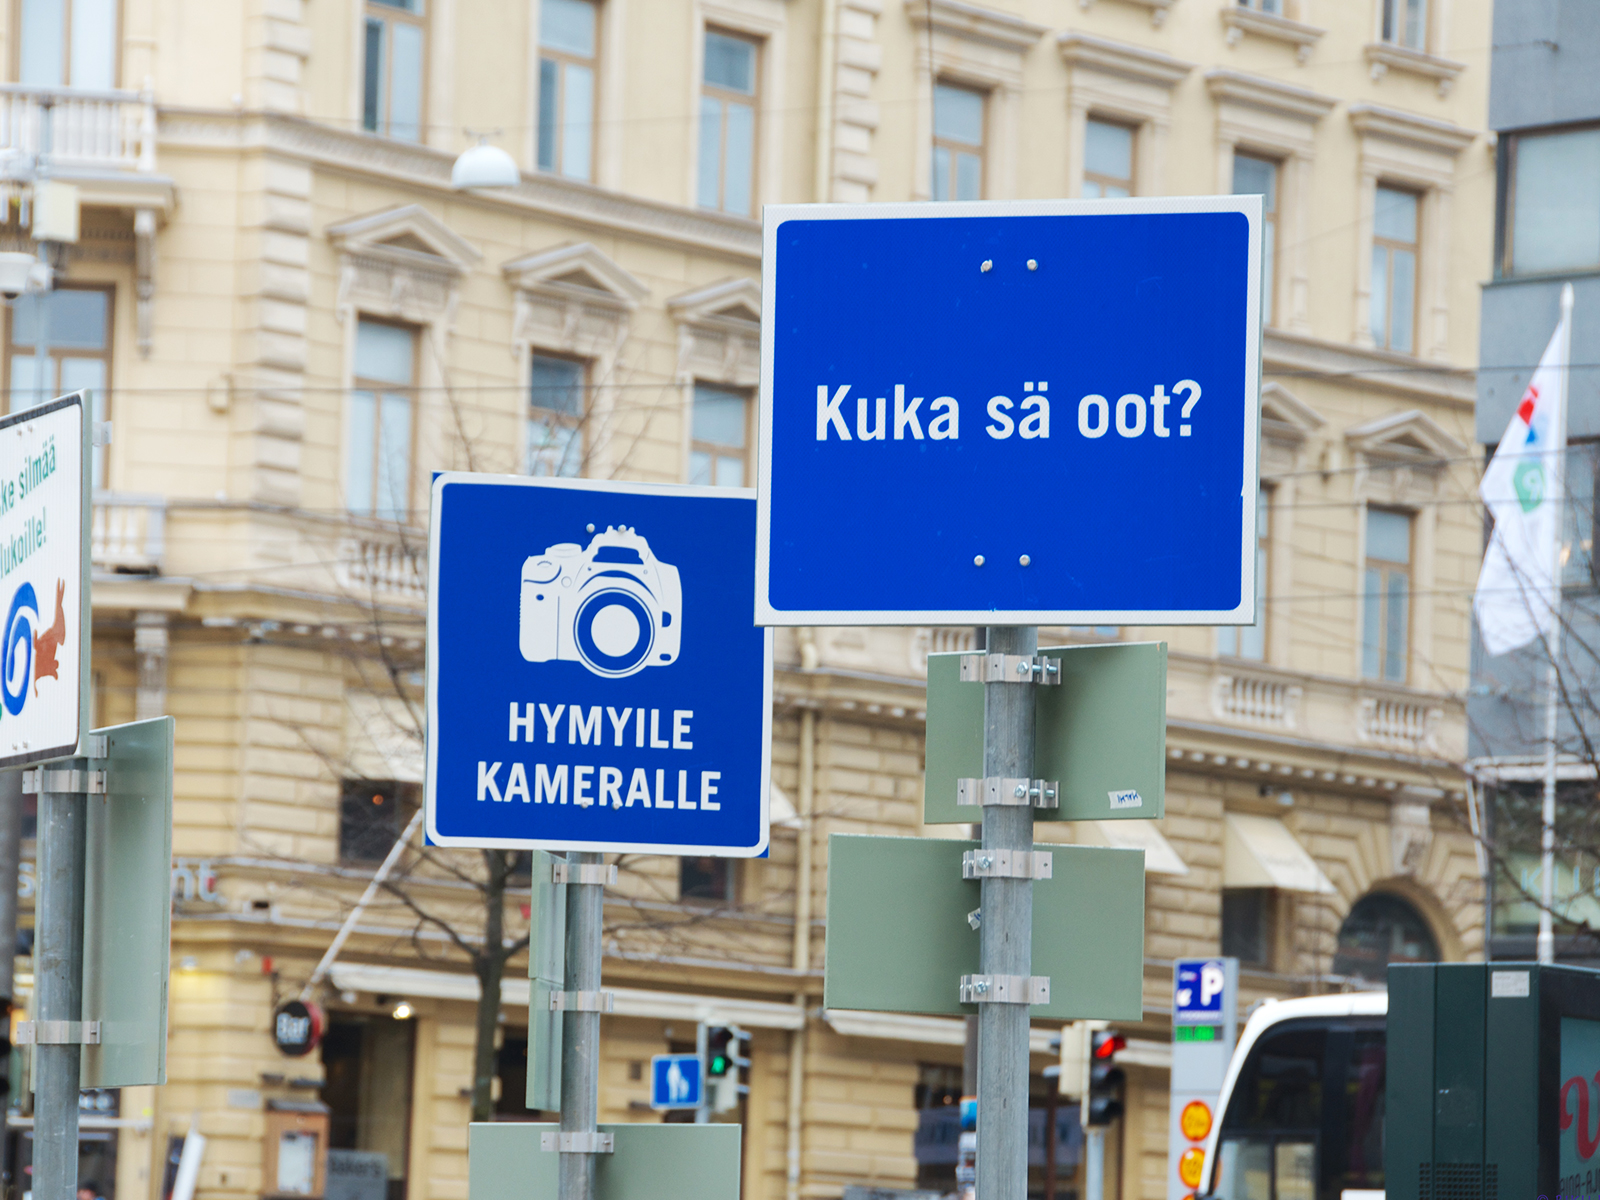 Helsinki Hymyile kameralle: Smile to the camera / Kuka sä olet? Who you are?